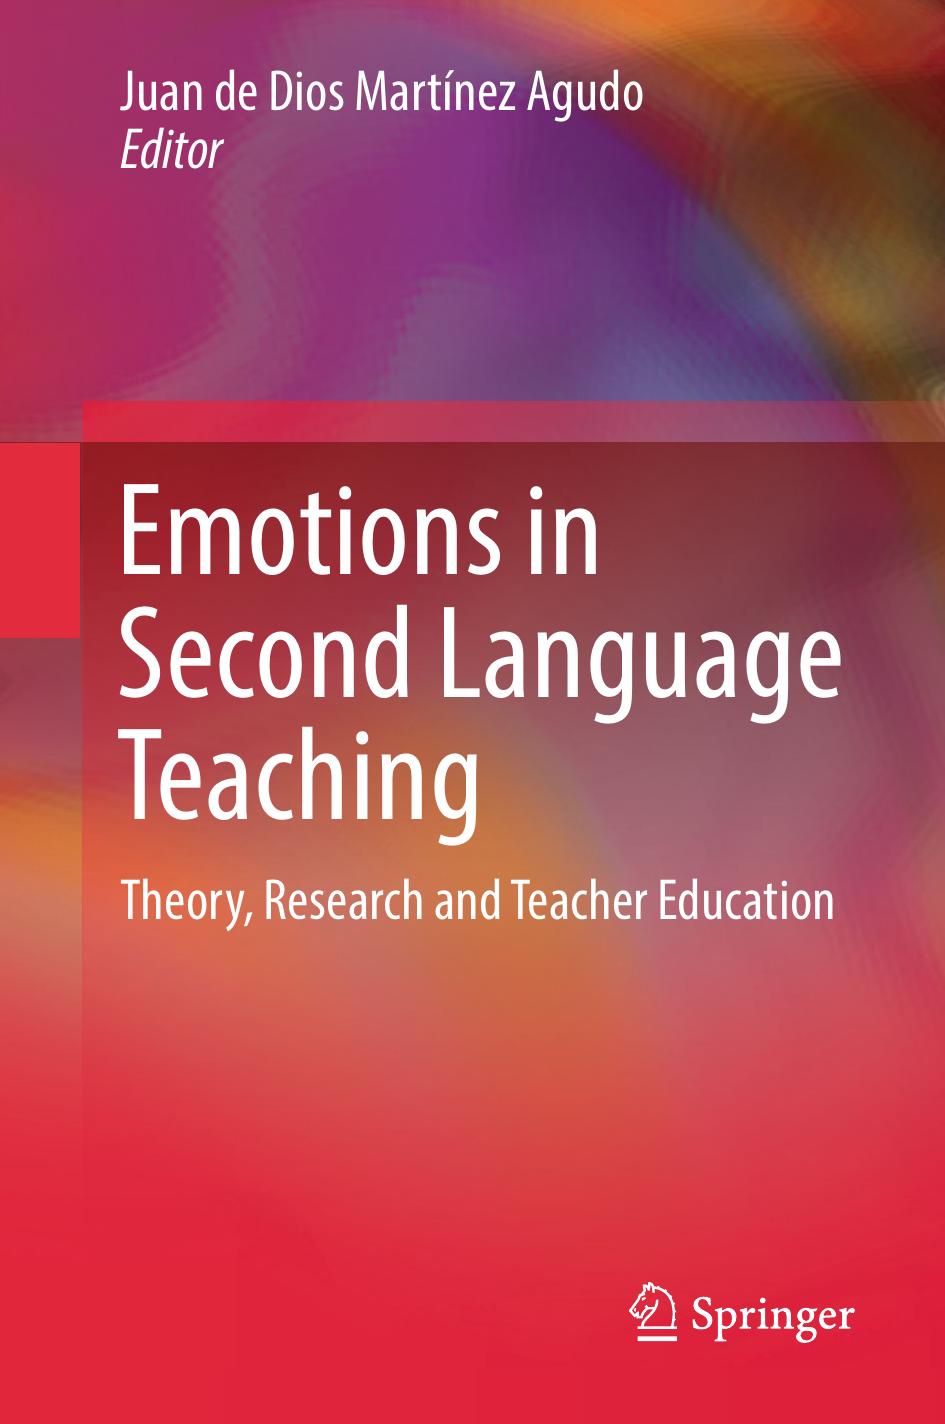 Emotions in Second Language Teaching by Juan de Dios Martínez Agudo